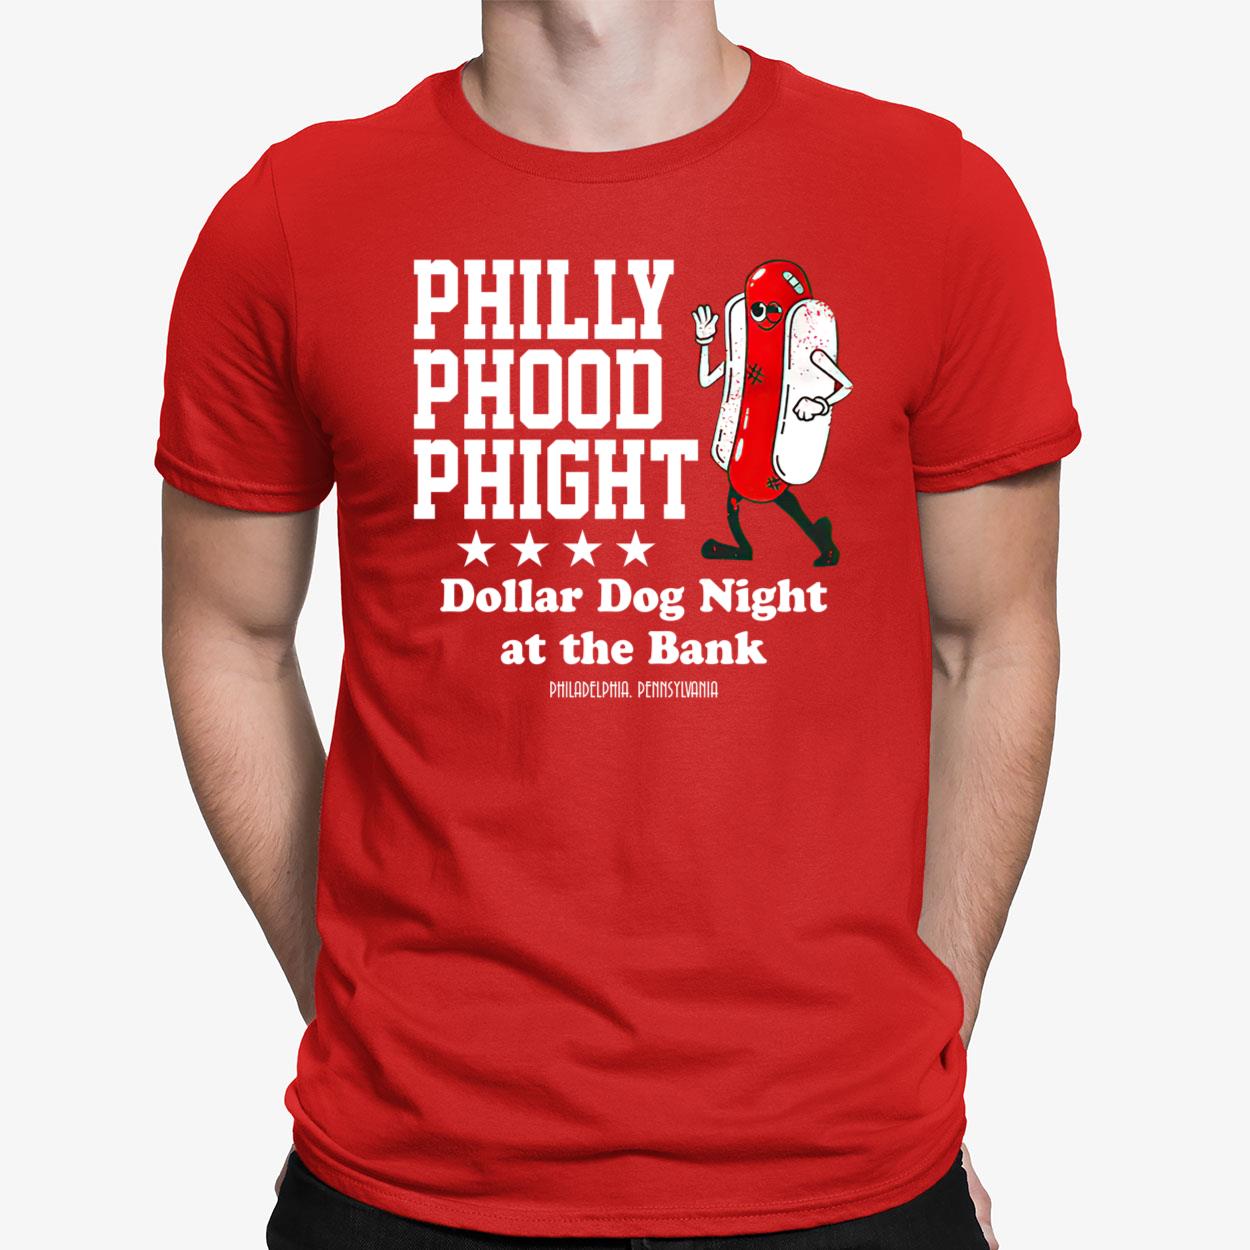 Philadelphia Phillies Philly phood phight dollar dog night at the